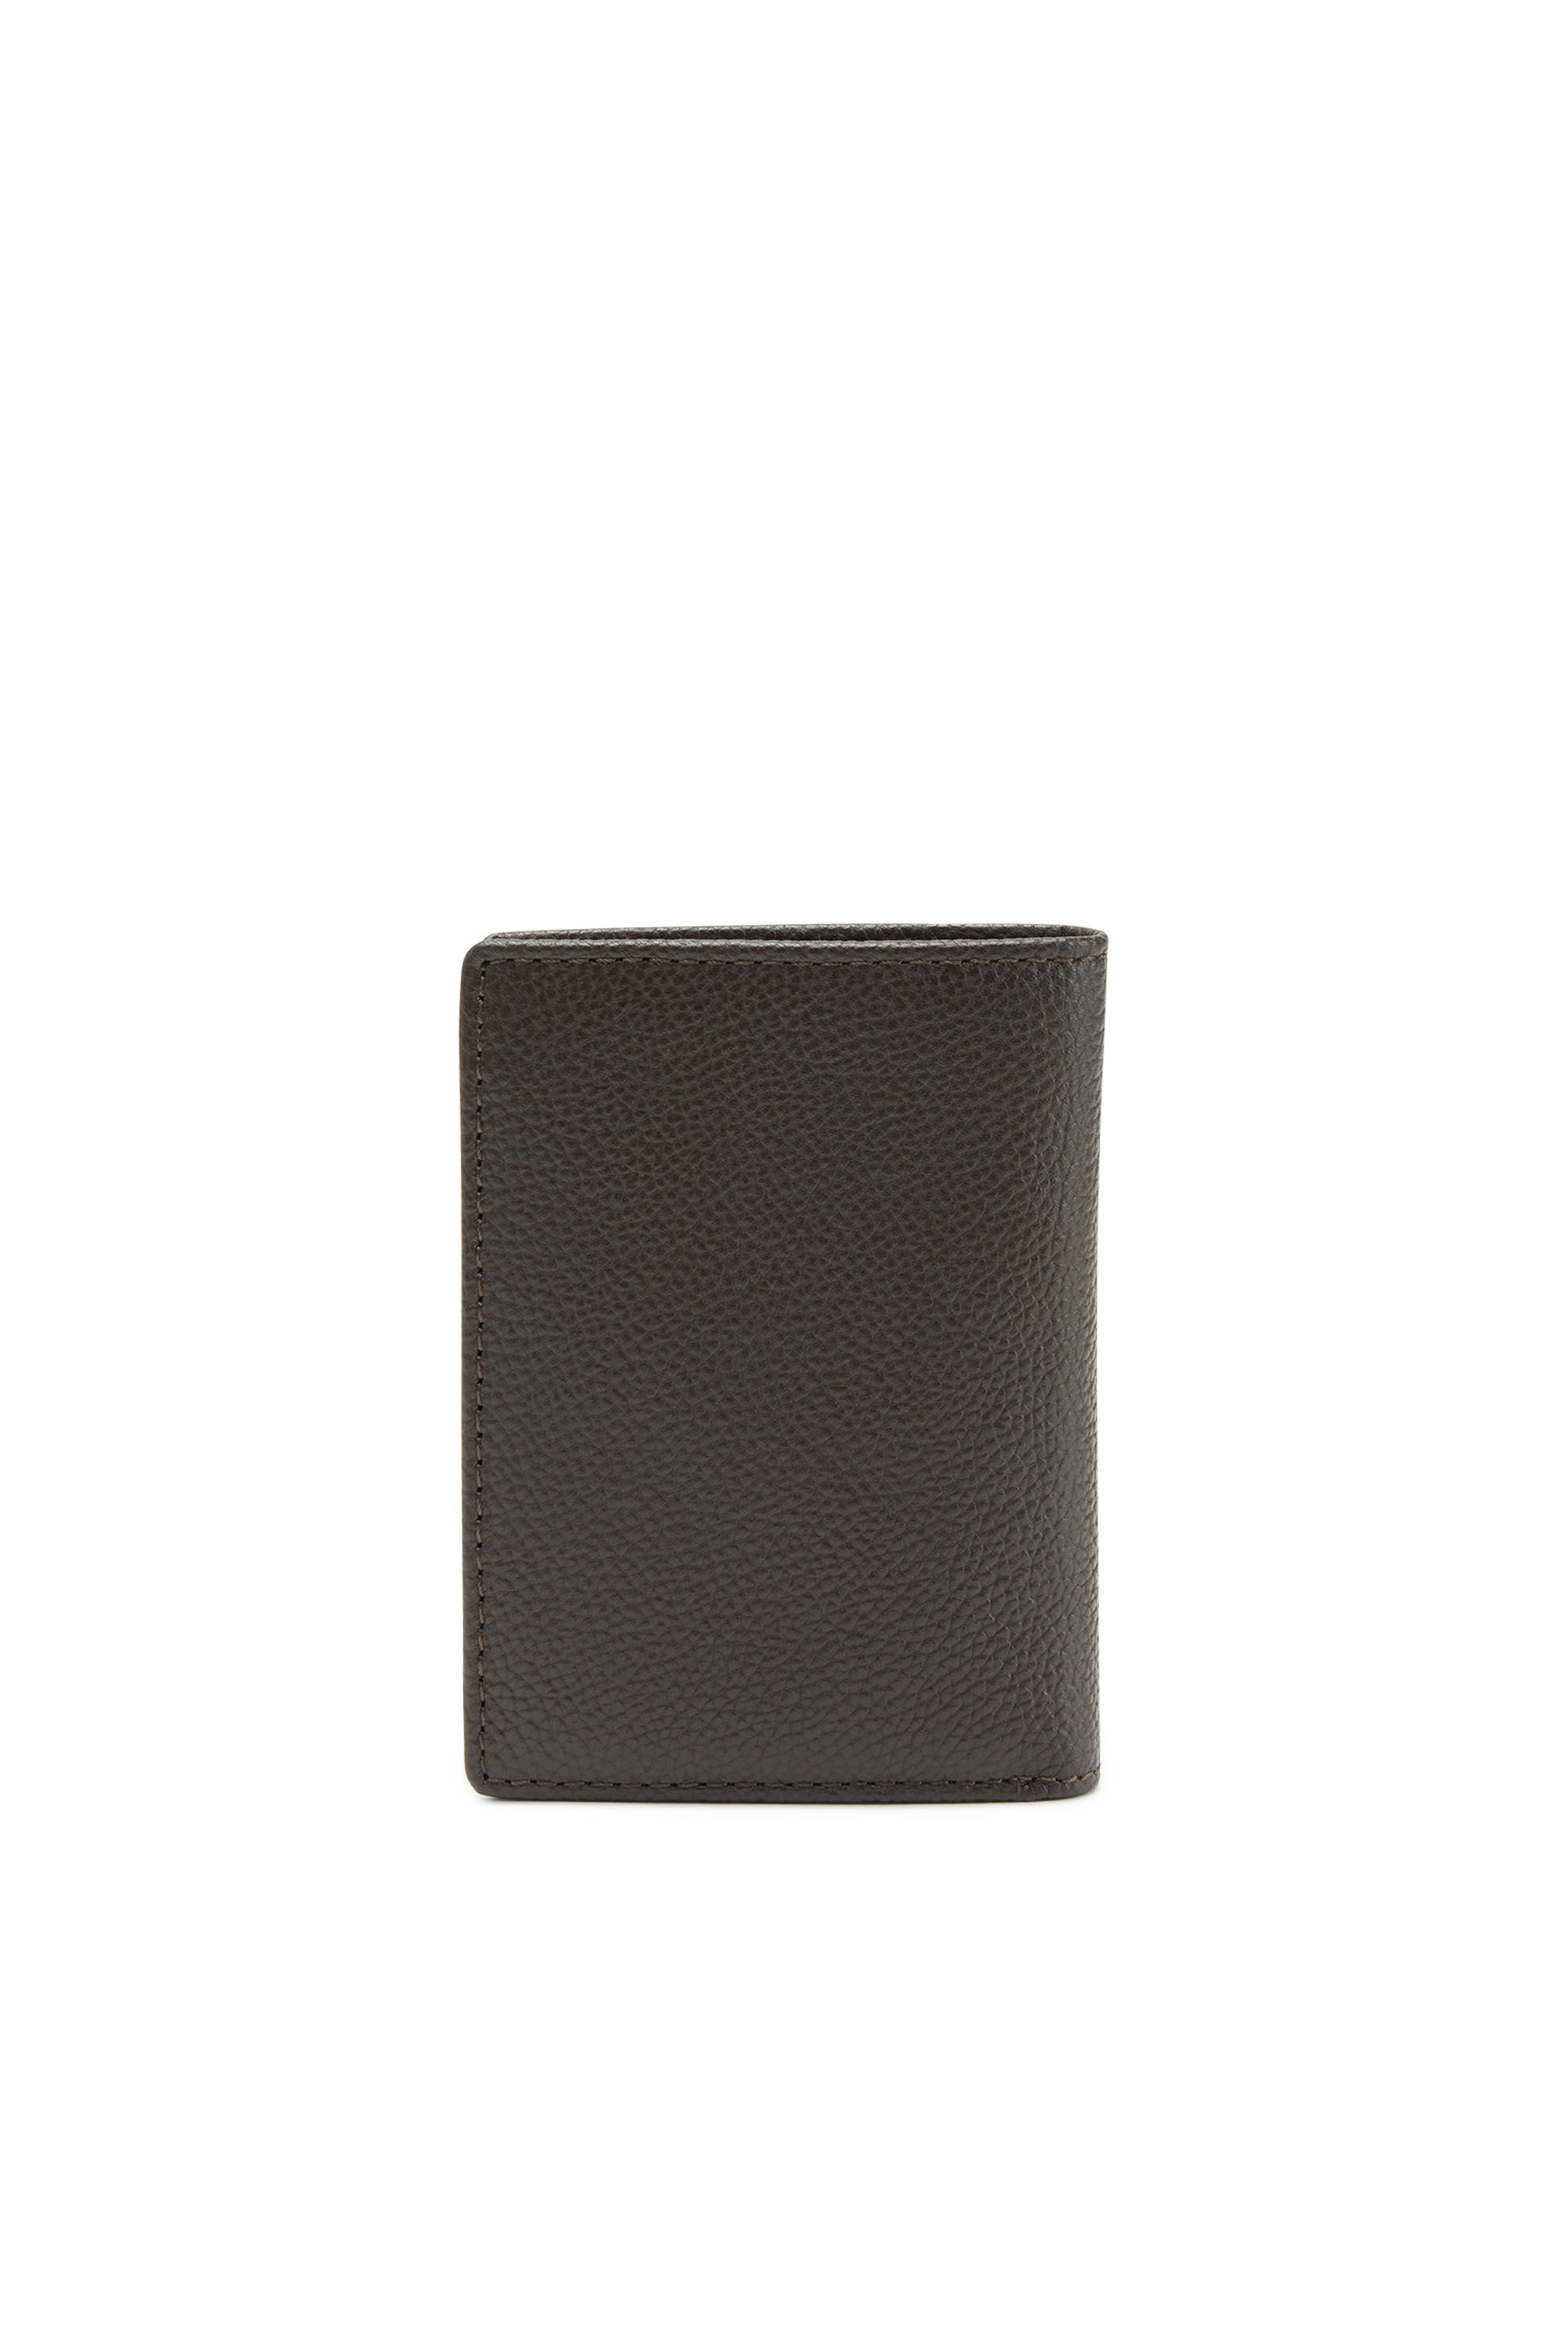 VERTICAL NEELA Man: Leather bi-fold wallet with logo plaque | Diesel